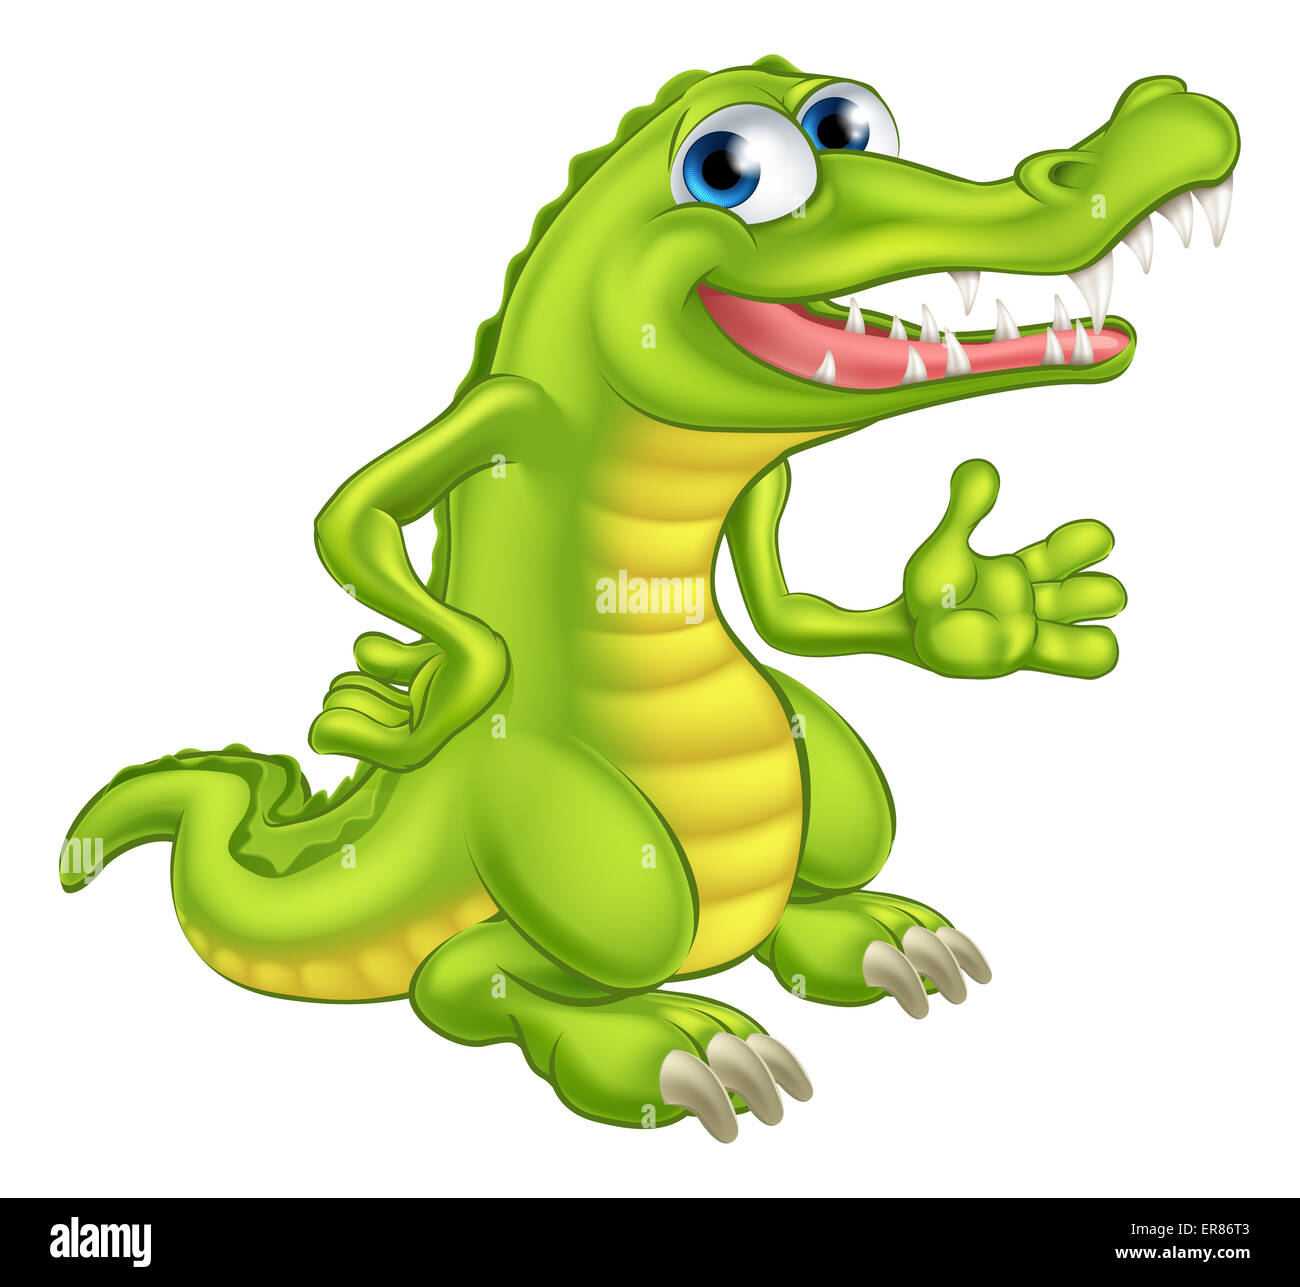 An illustration of a cute cartoon crocodile or alligator Stock Photo